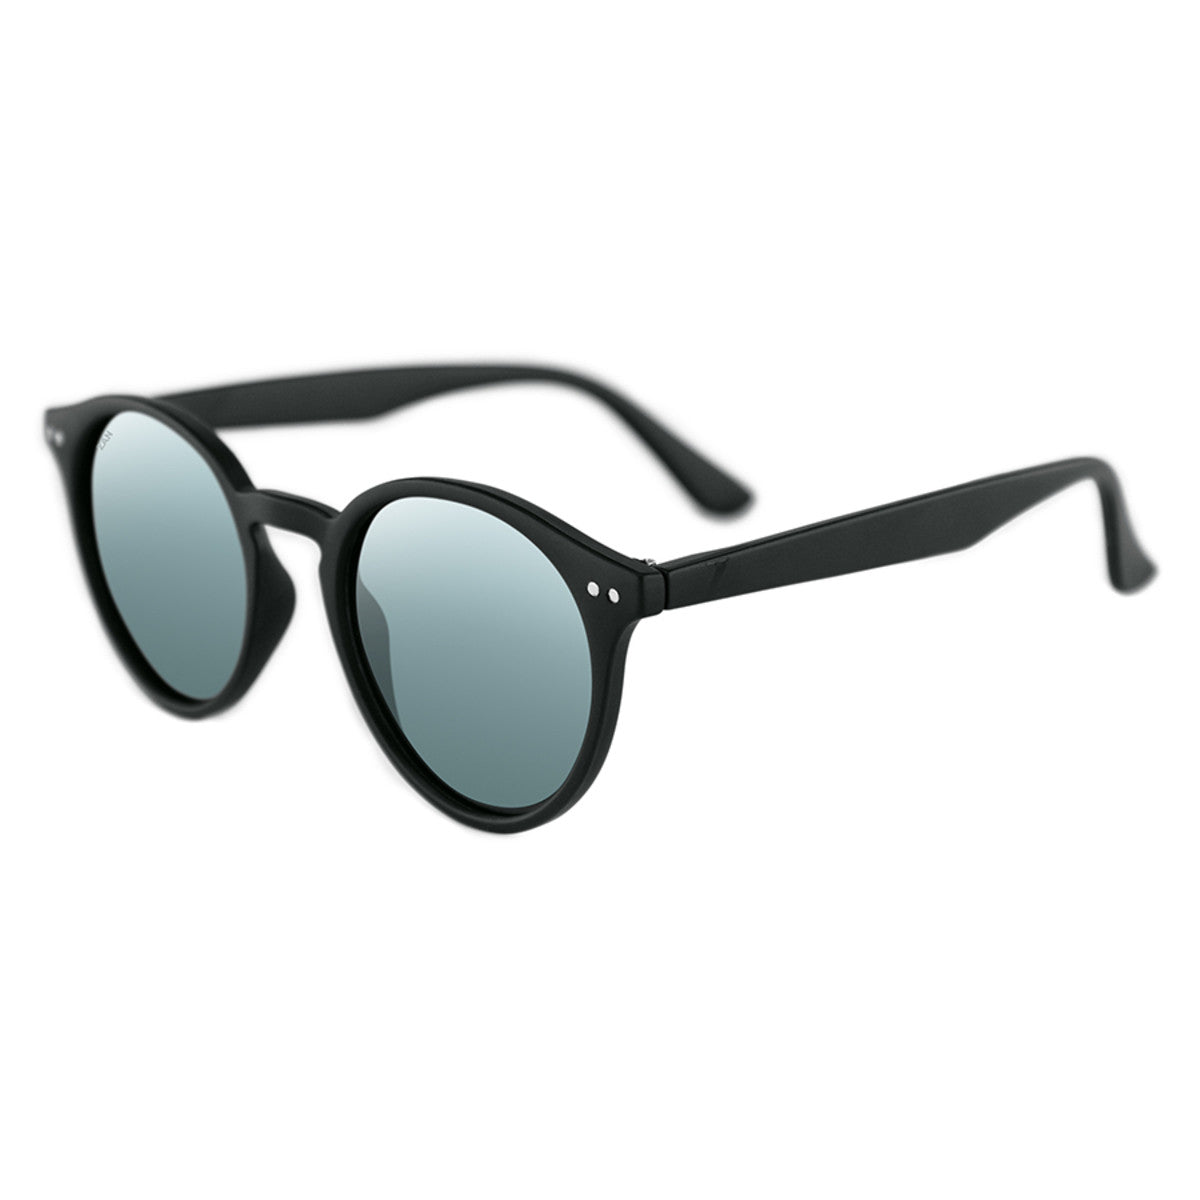 Zan Headgear Jetty Sunglasses - Clothing & Accessories